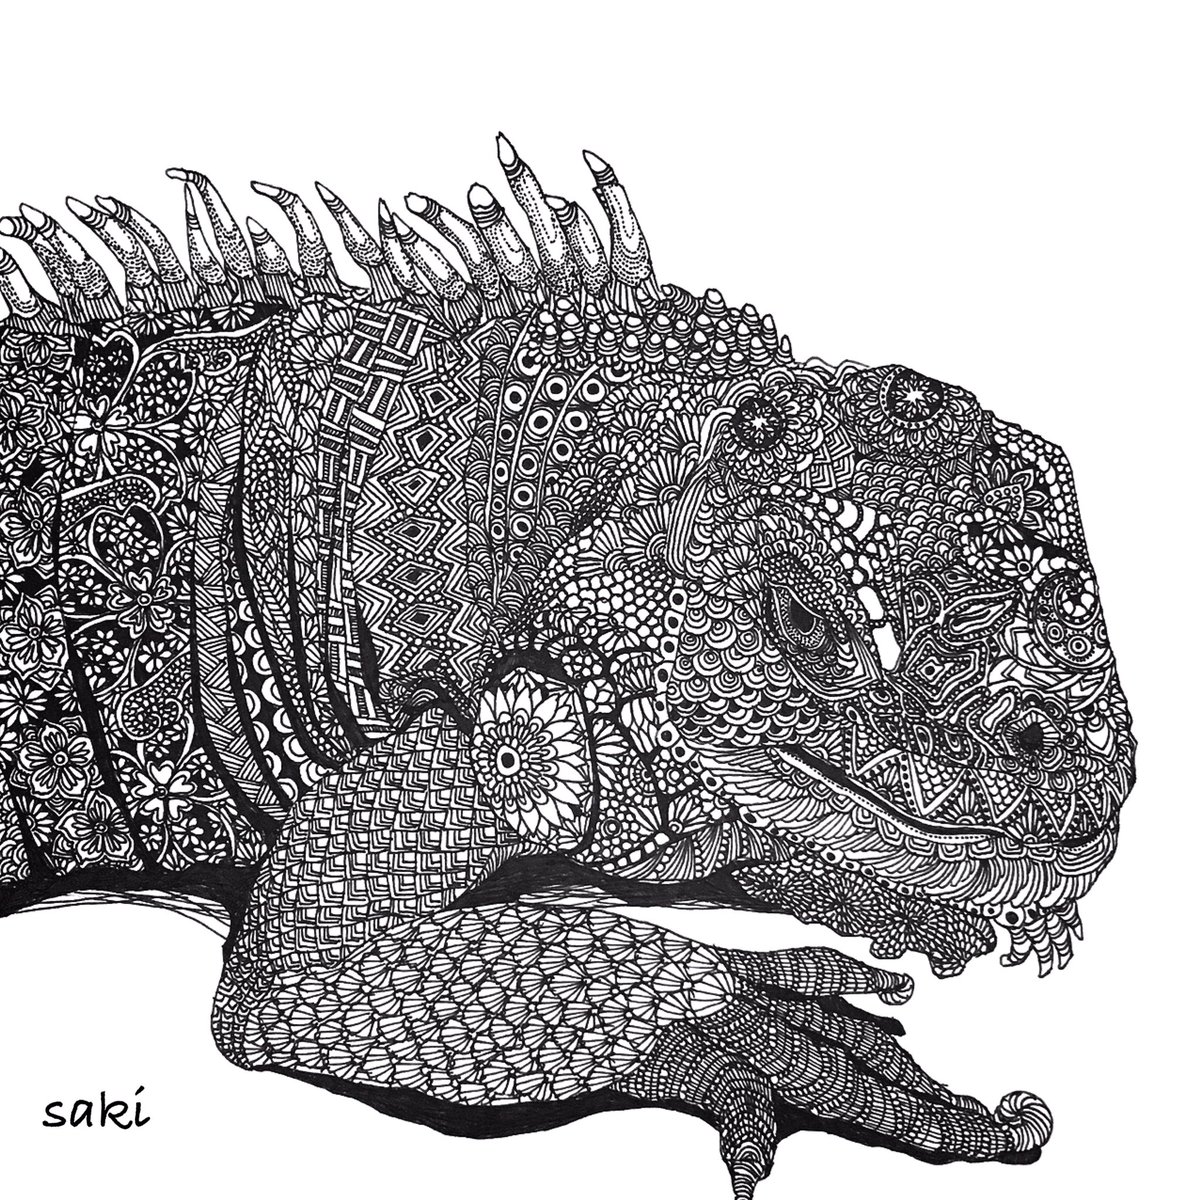 Saki ボールペン画 イグアナさん T Co Xzoyr1rtgu イラスト 爬虫類 イグアナ Illustration Reptile Iguana T Co Af18pw3gyn Twitter